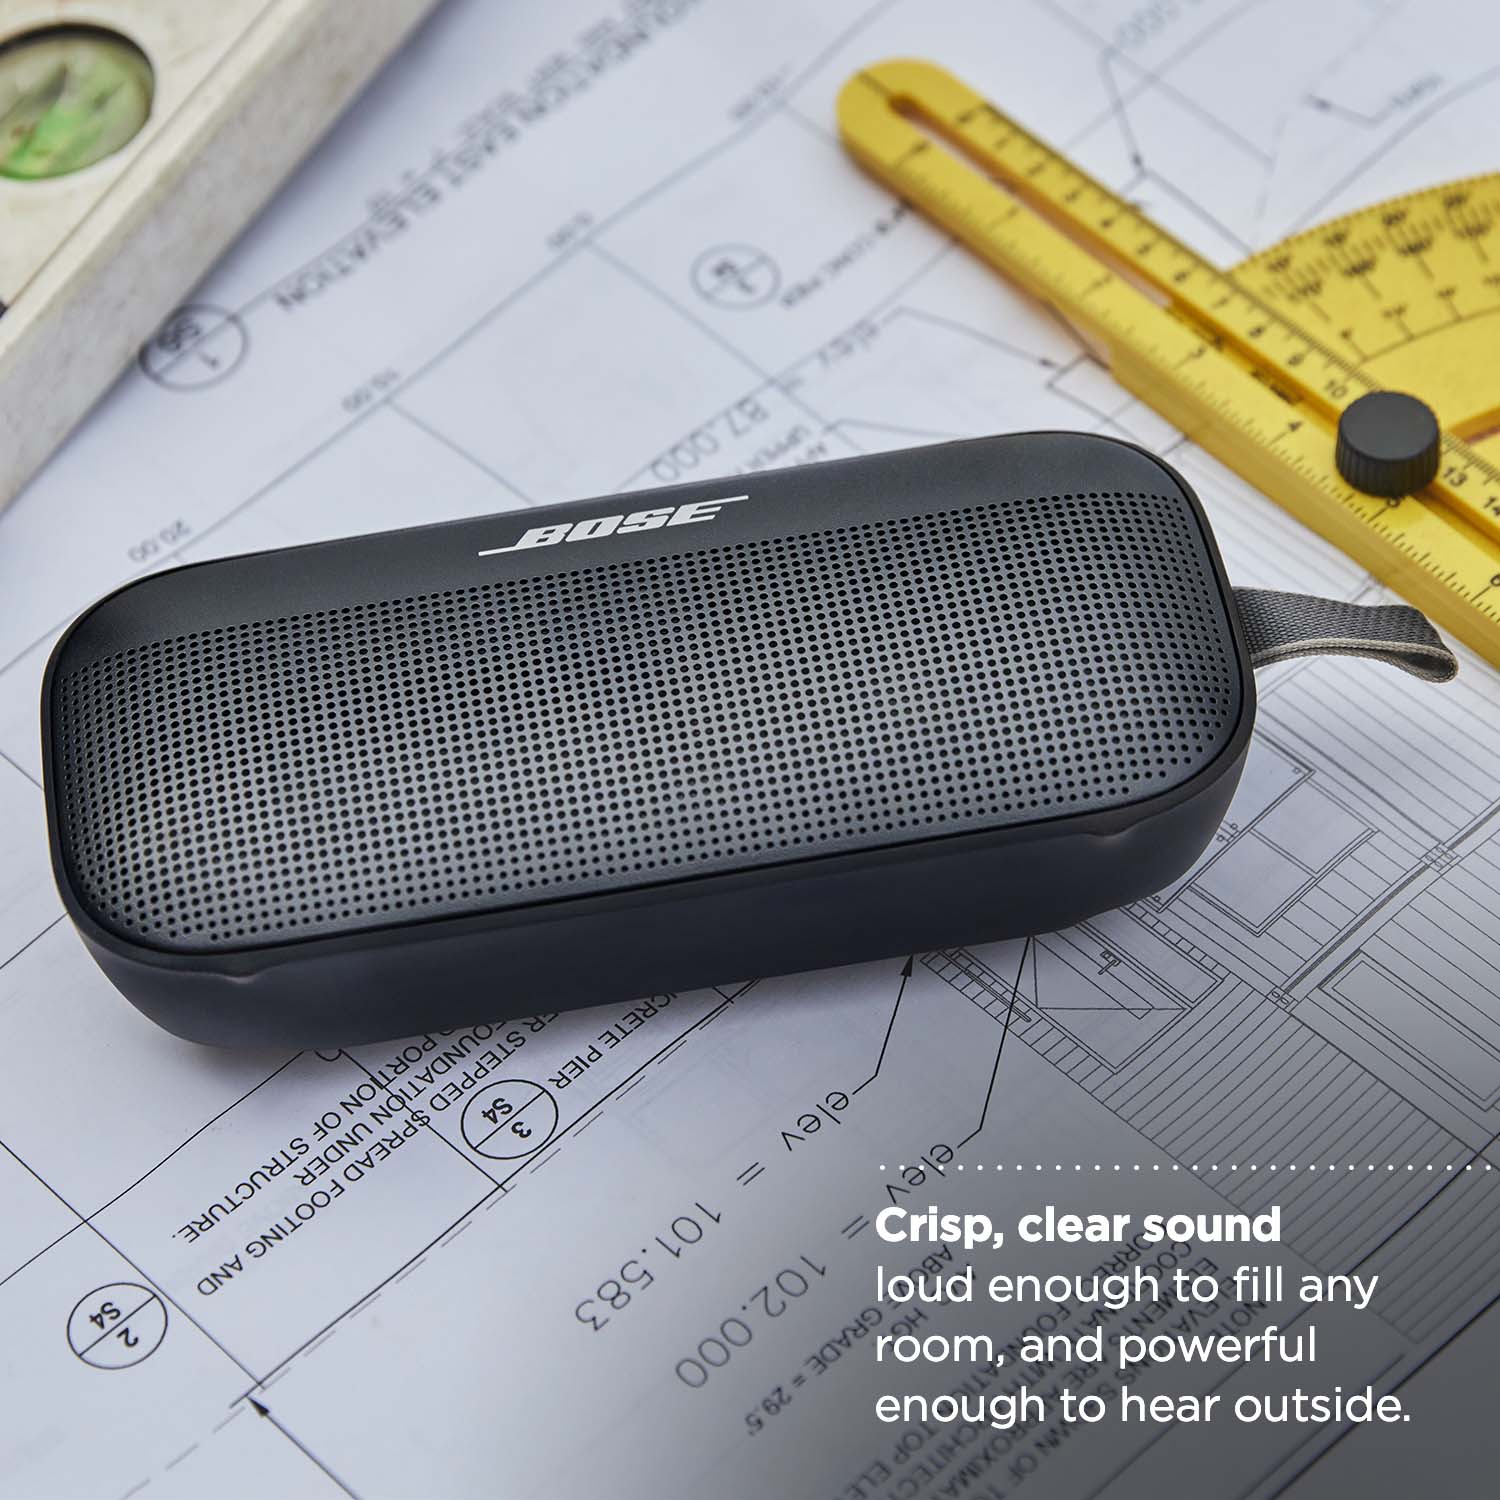 Bose SoundLink Flex Wireless Waterproof Portable Bluetooth Speaker, Black - image 2 of 10